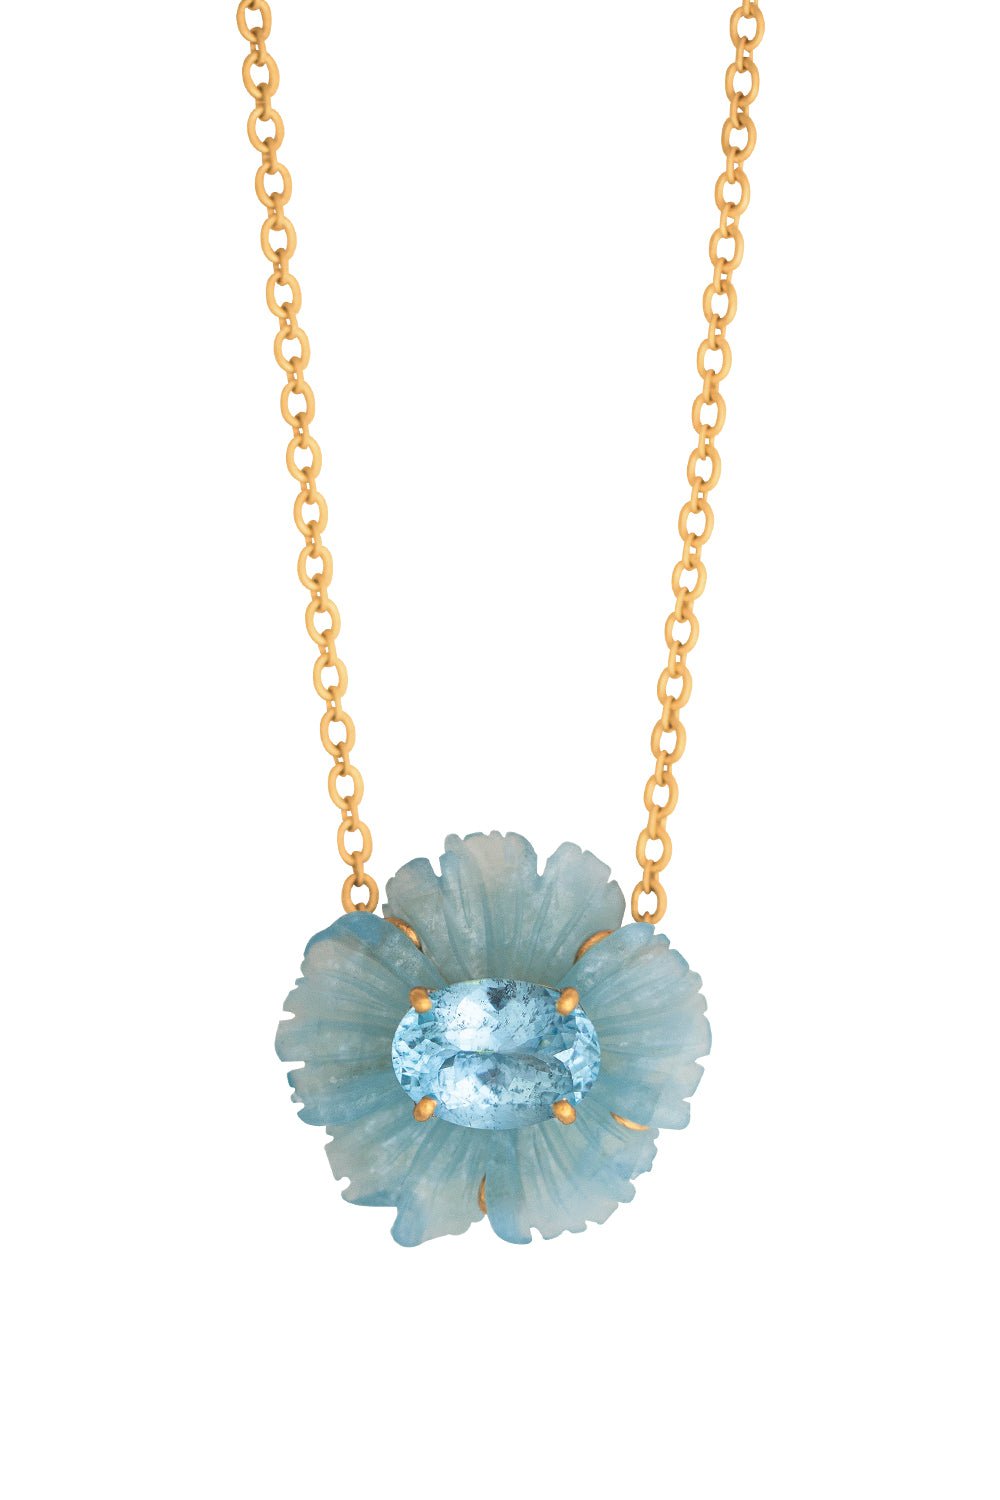 IRENE NEUWIRTH JEWELRY-Tropical Flower Aquamarine Necklace-YELLOW GOLD